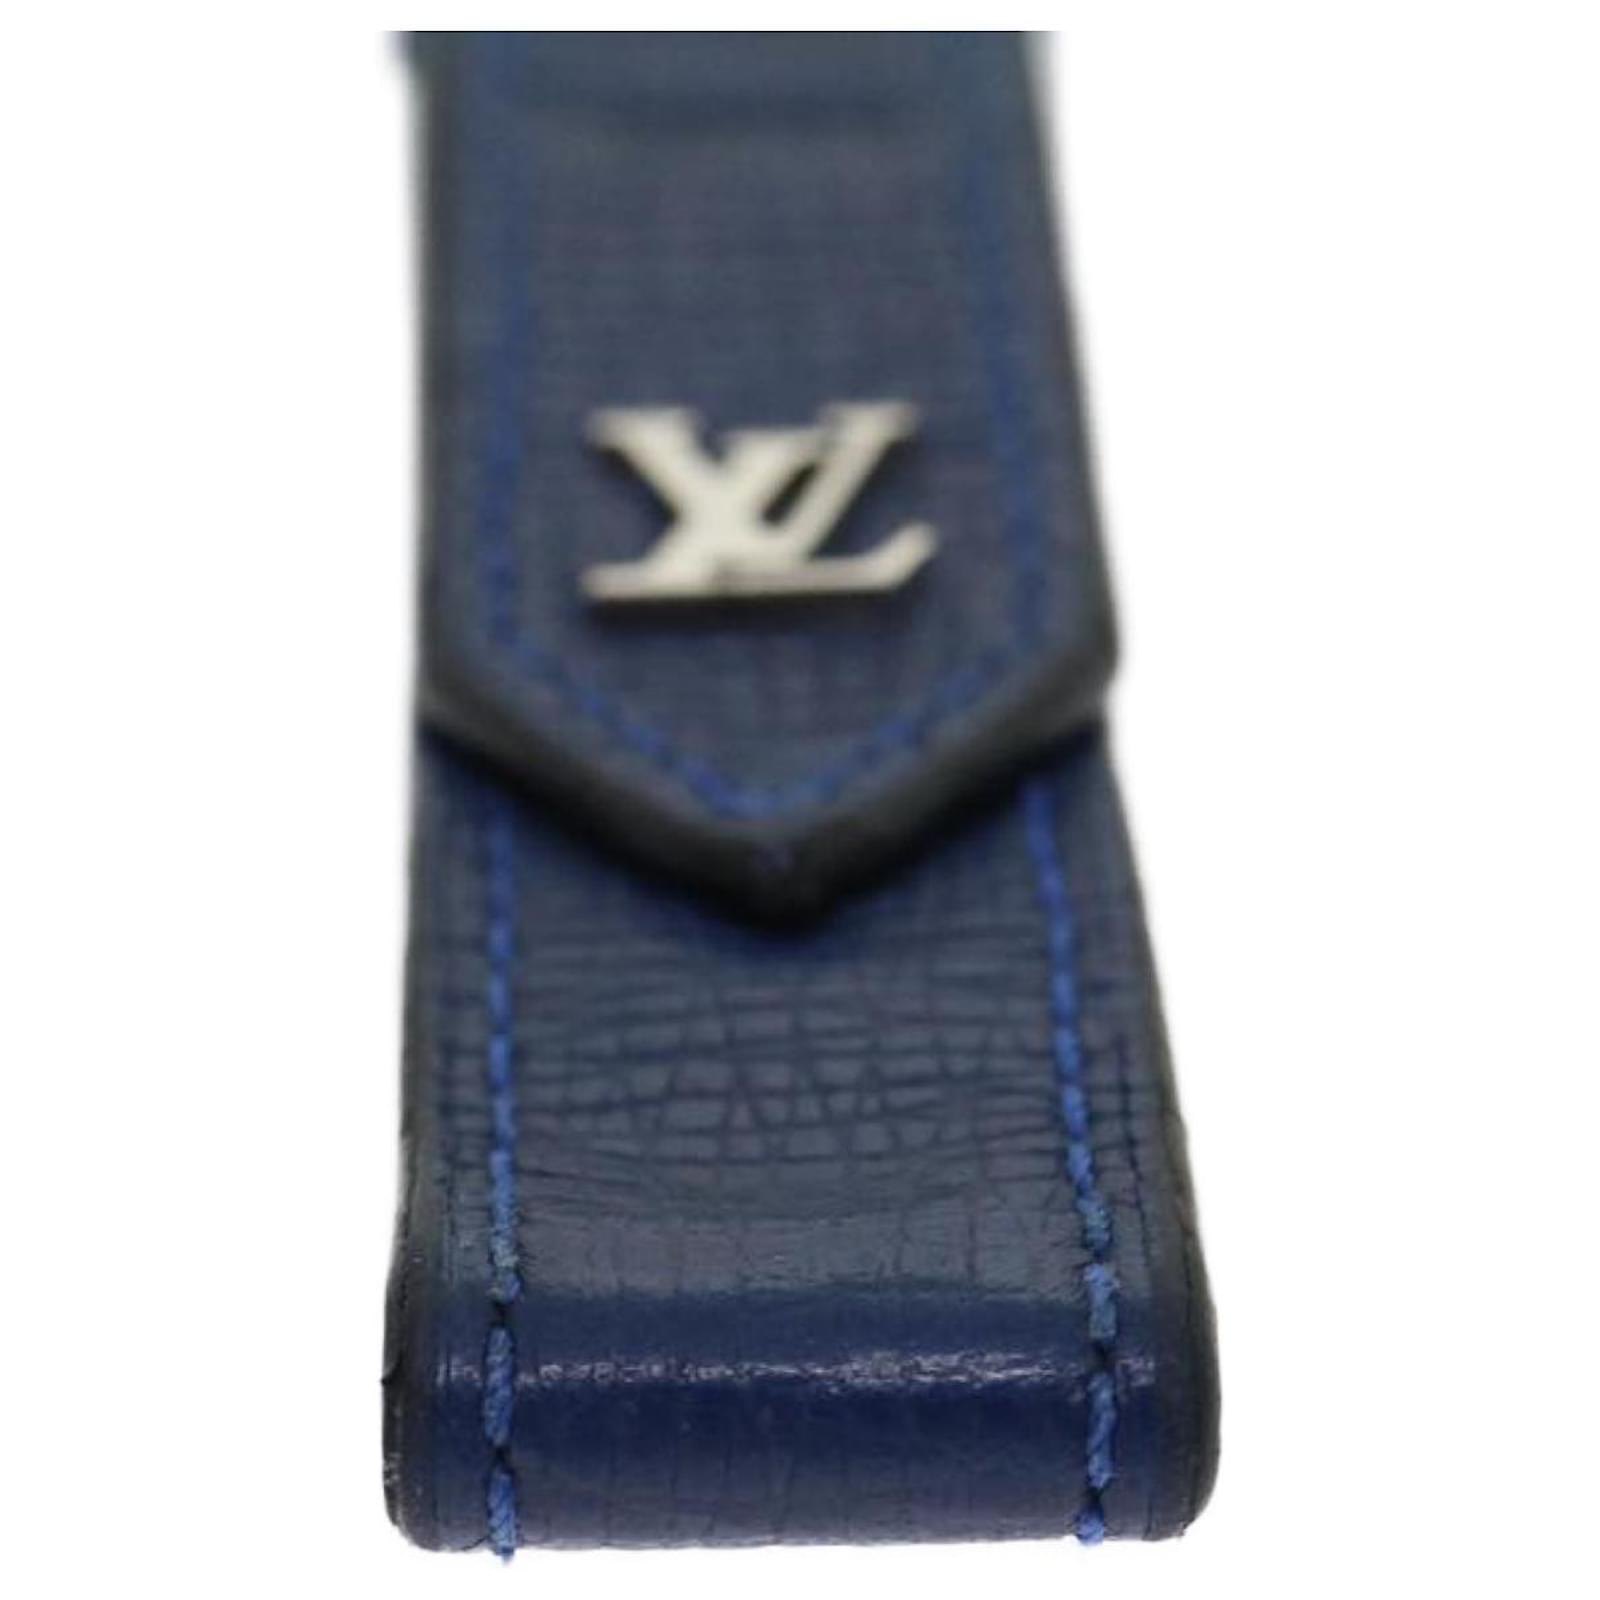 Louis Vuitton Lv Dragonne Key Holder (PORTE-CLES LV DRAGONNE